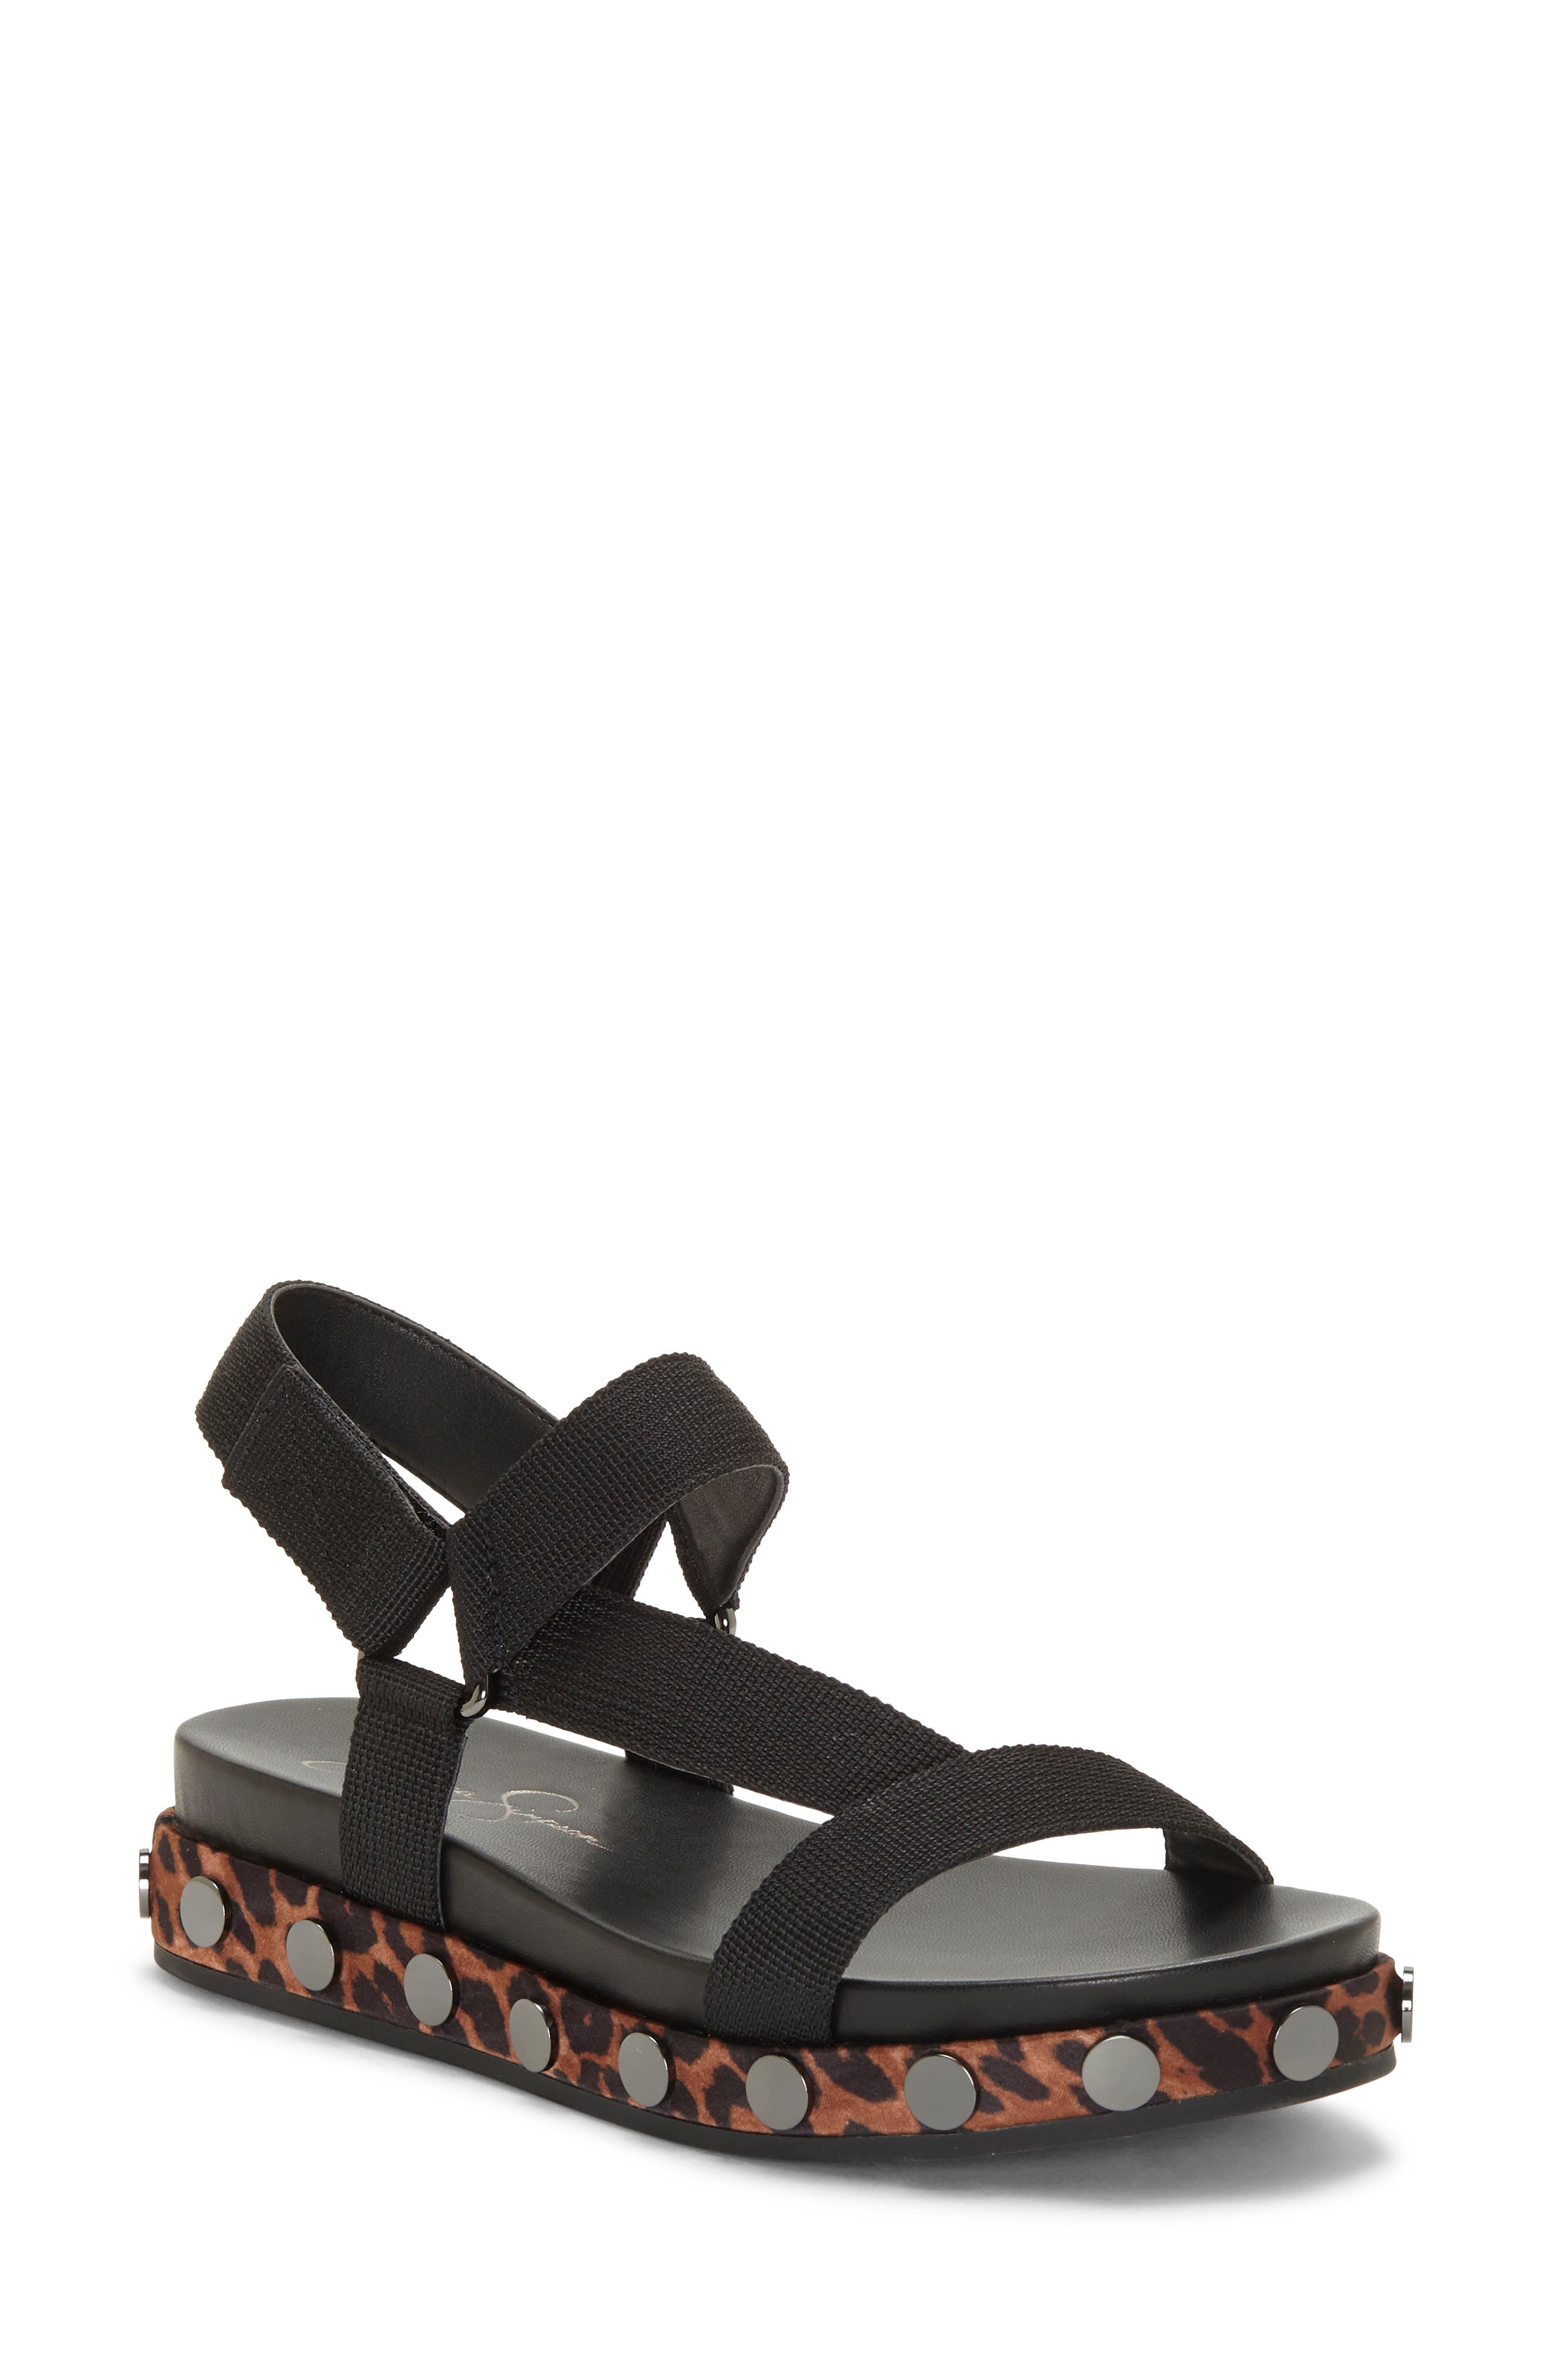 jessica simpson black platform sandals